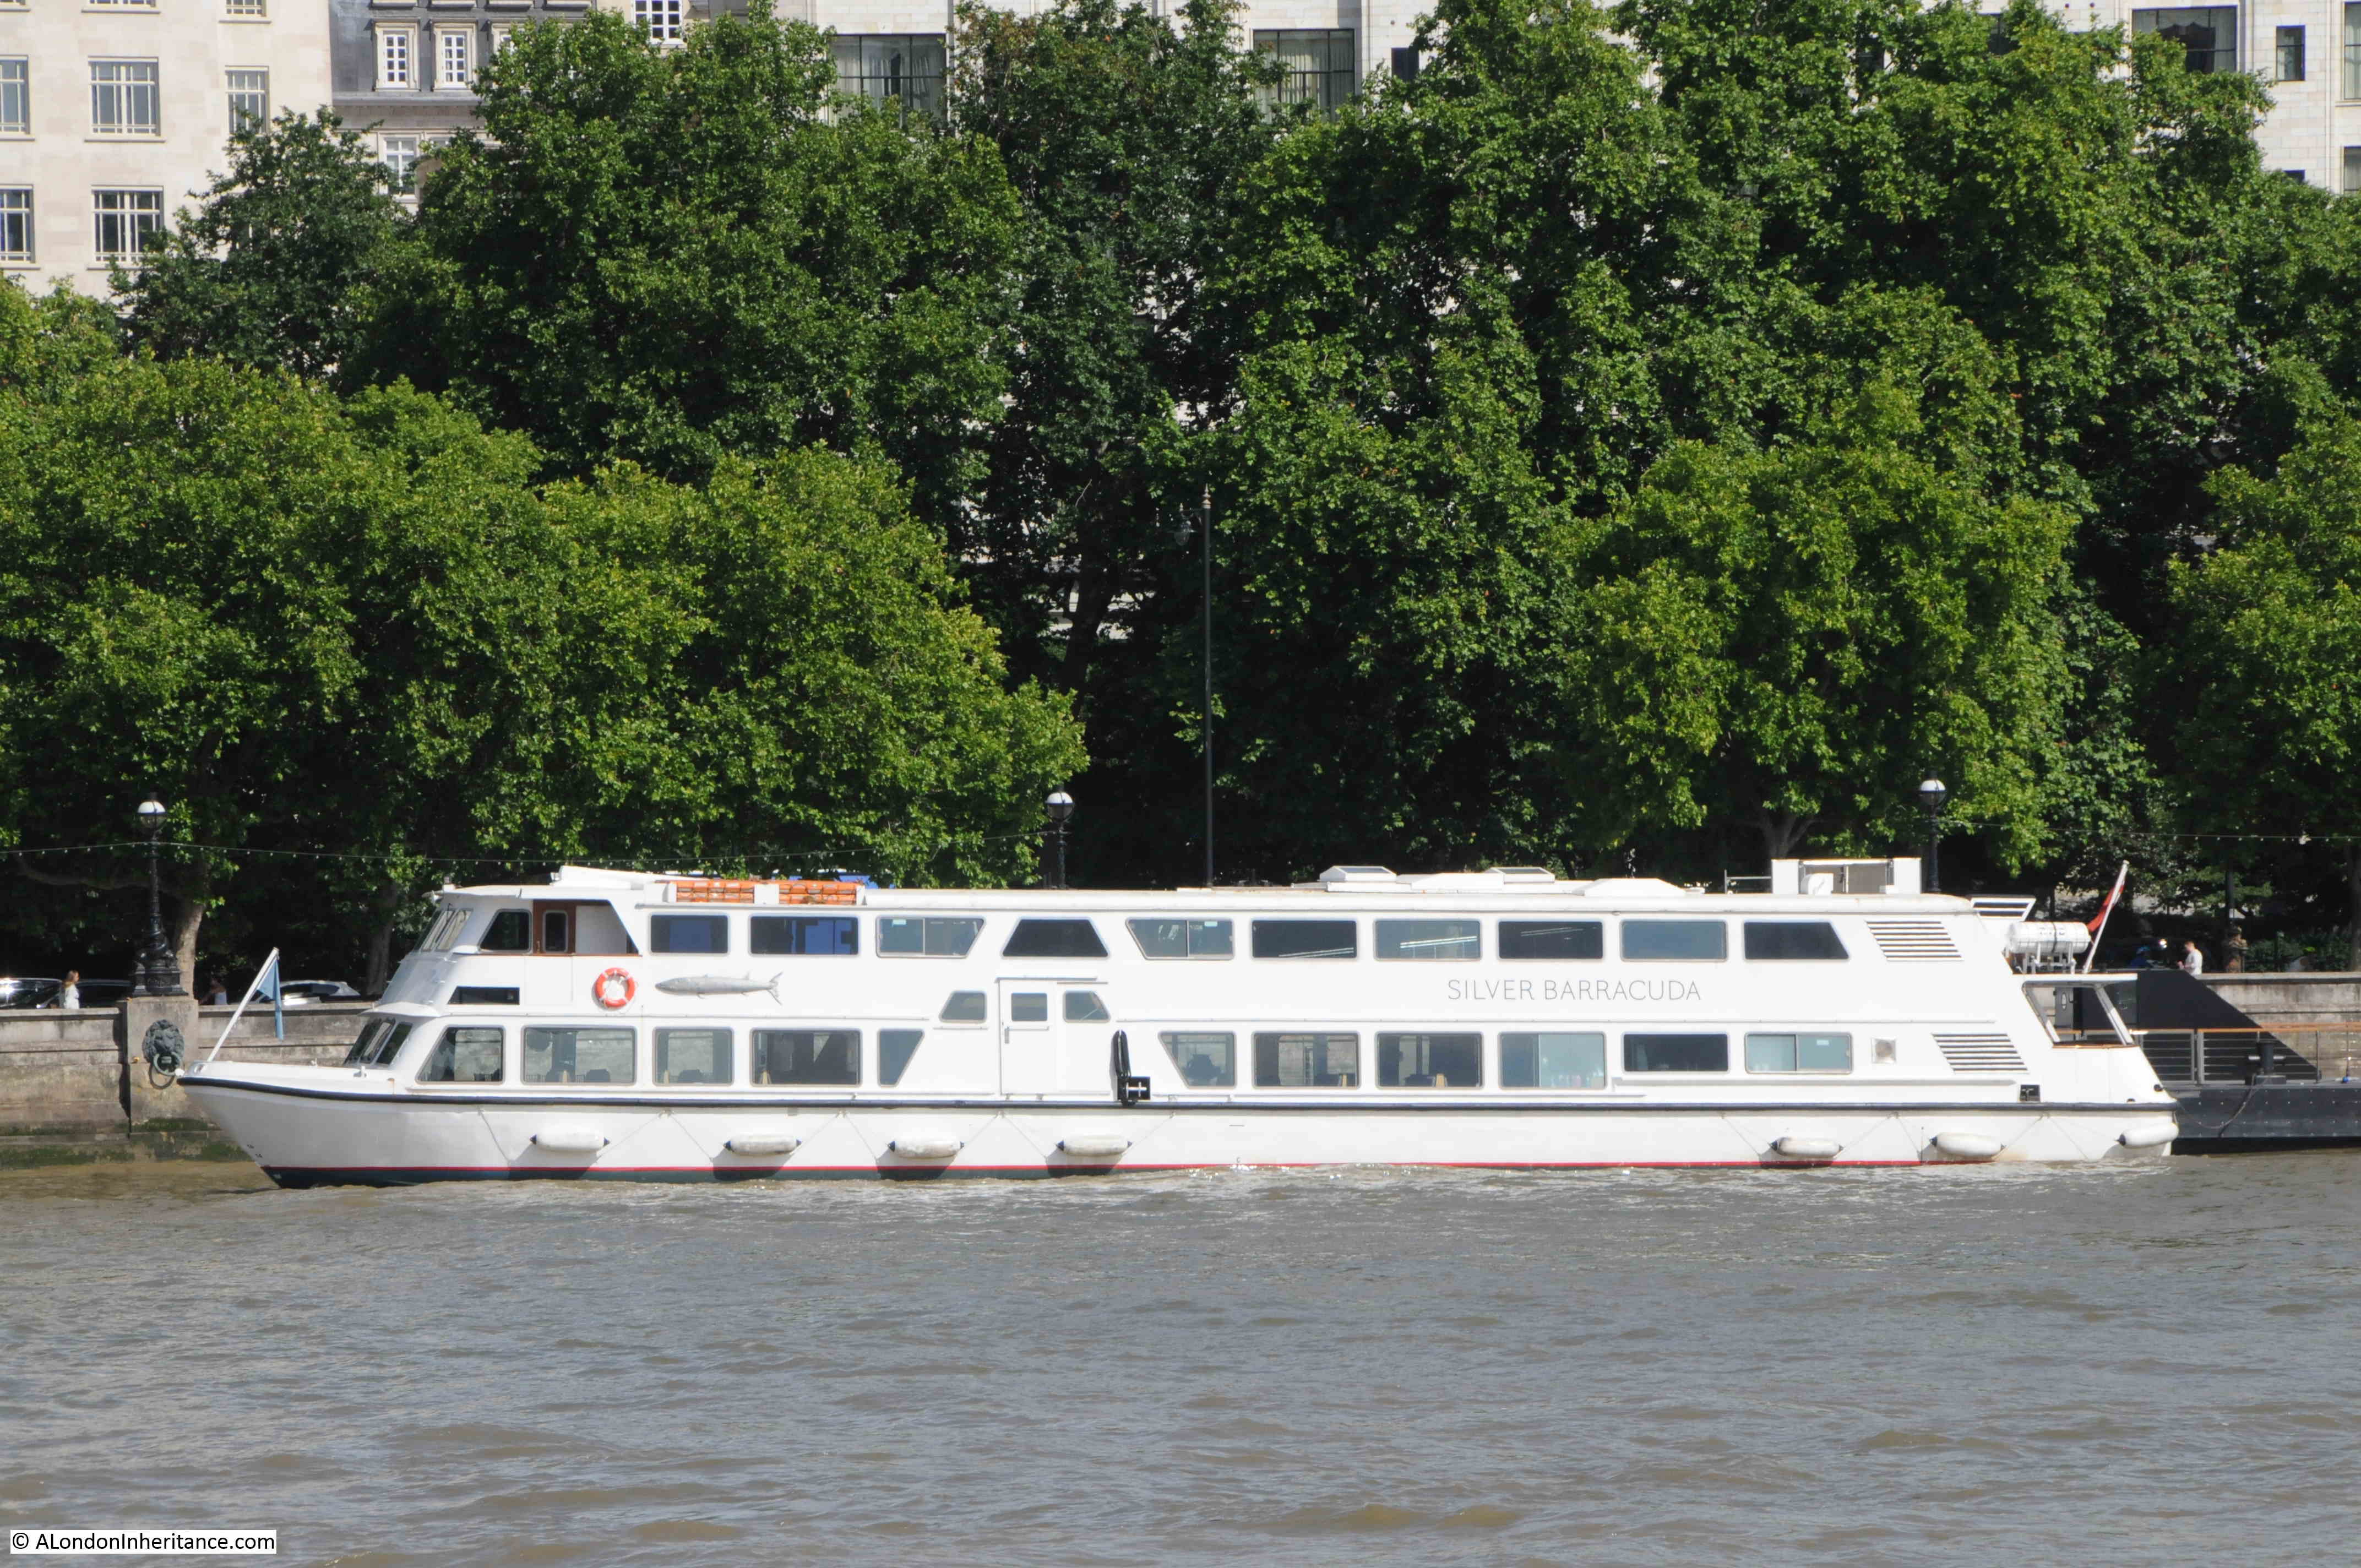 Pleasure boats on the Thames